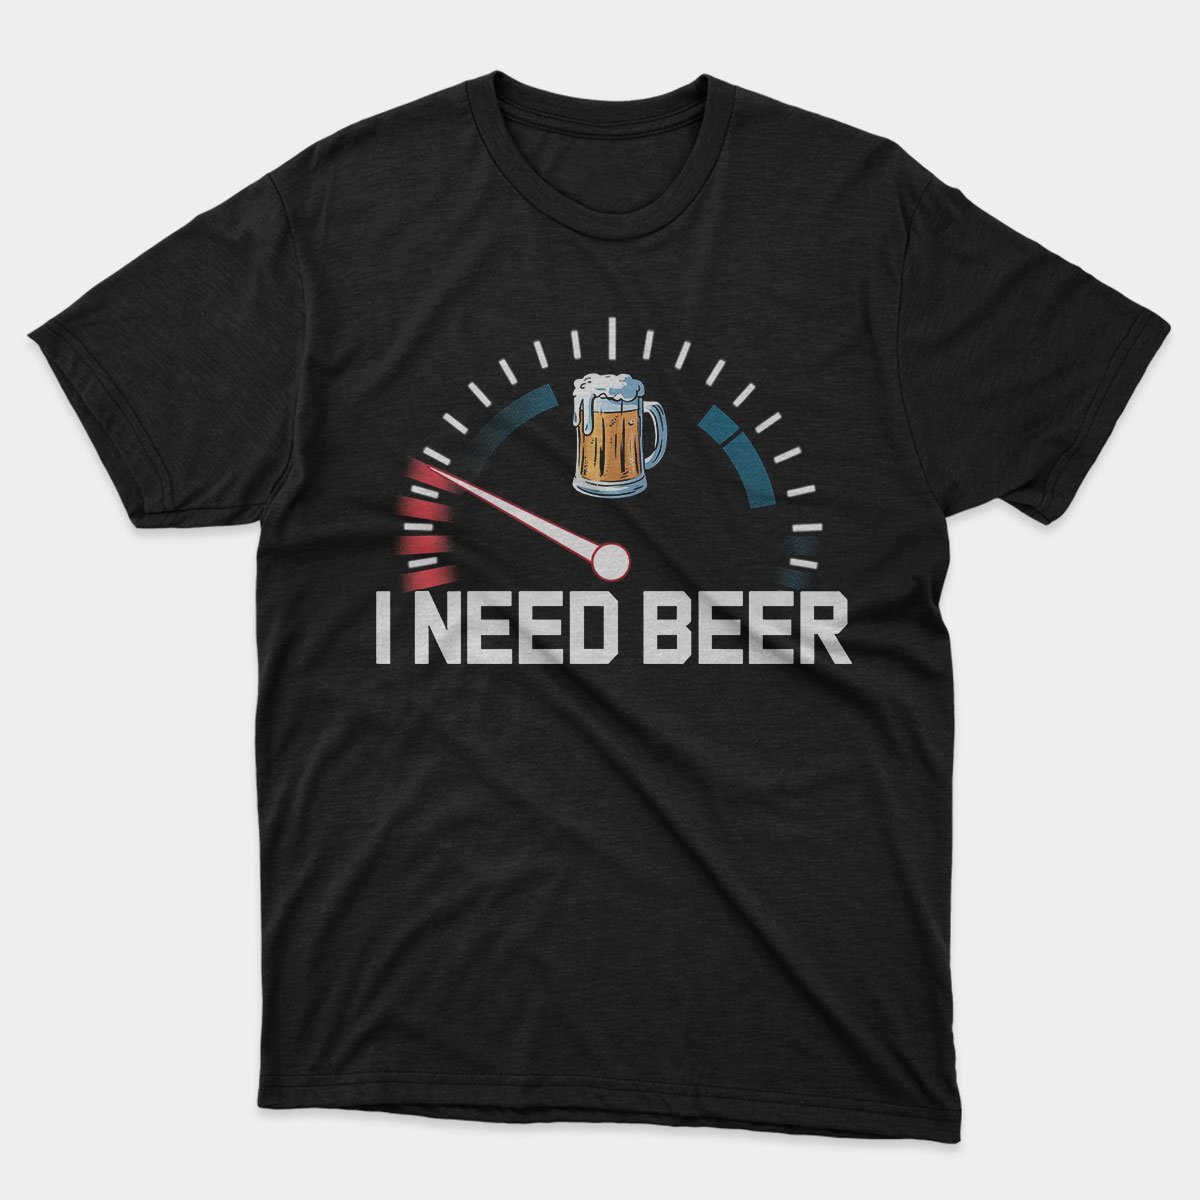 I need Beer T-shirt